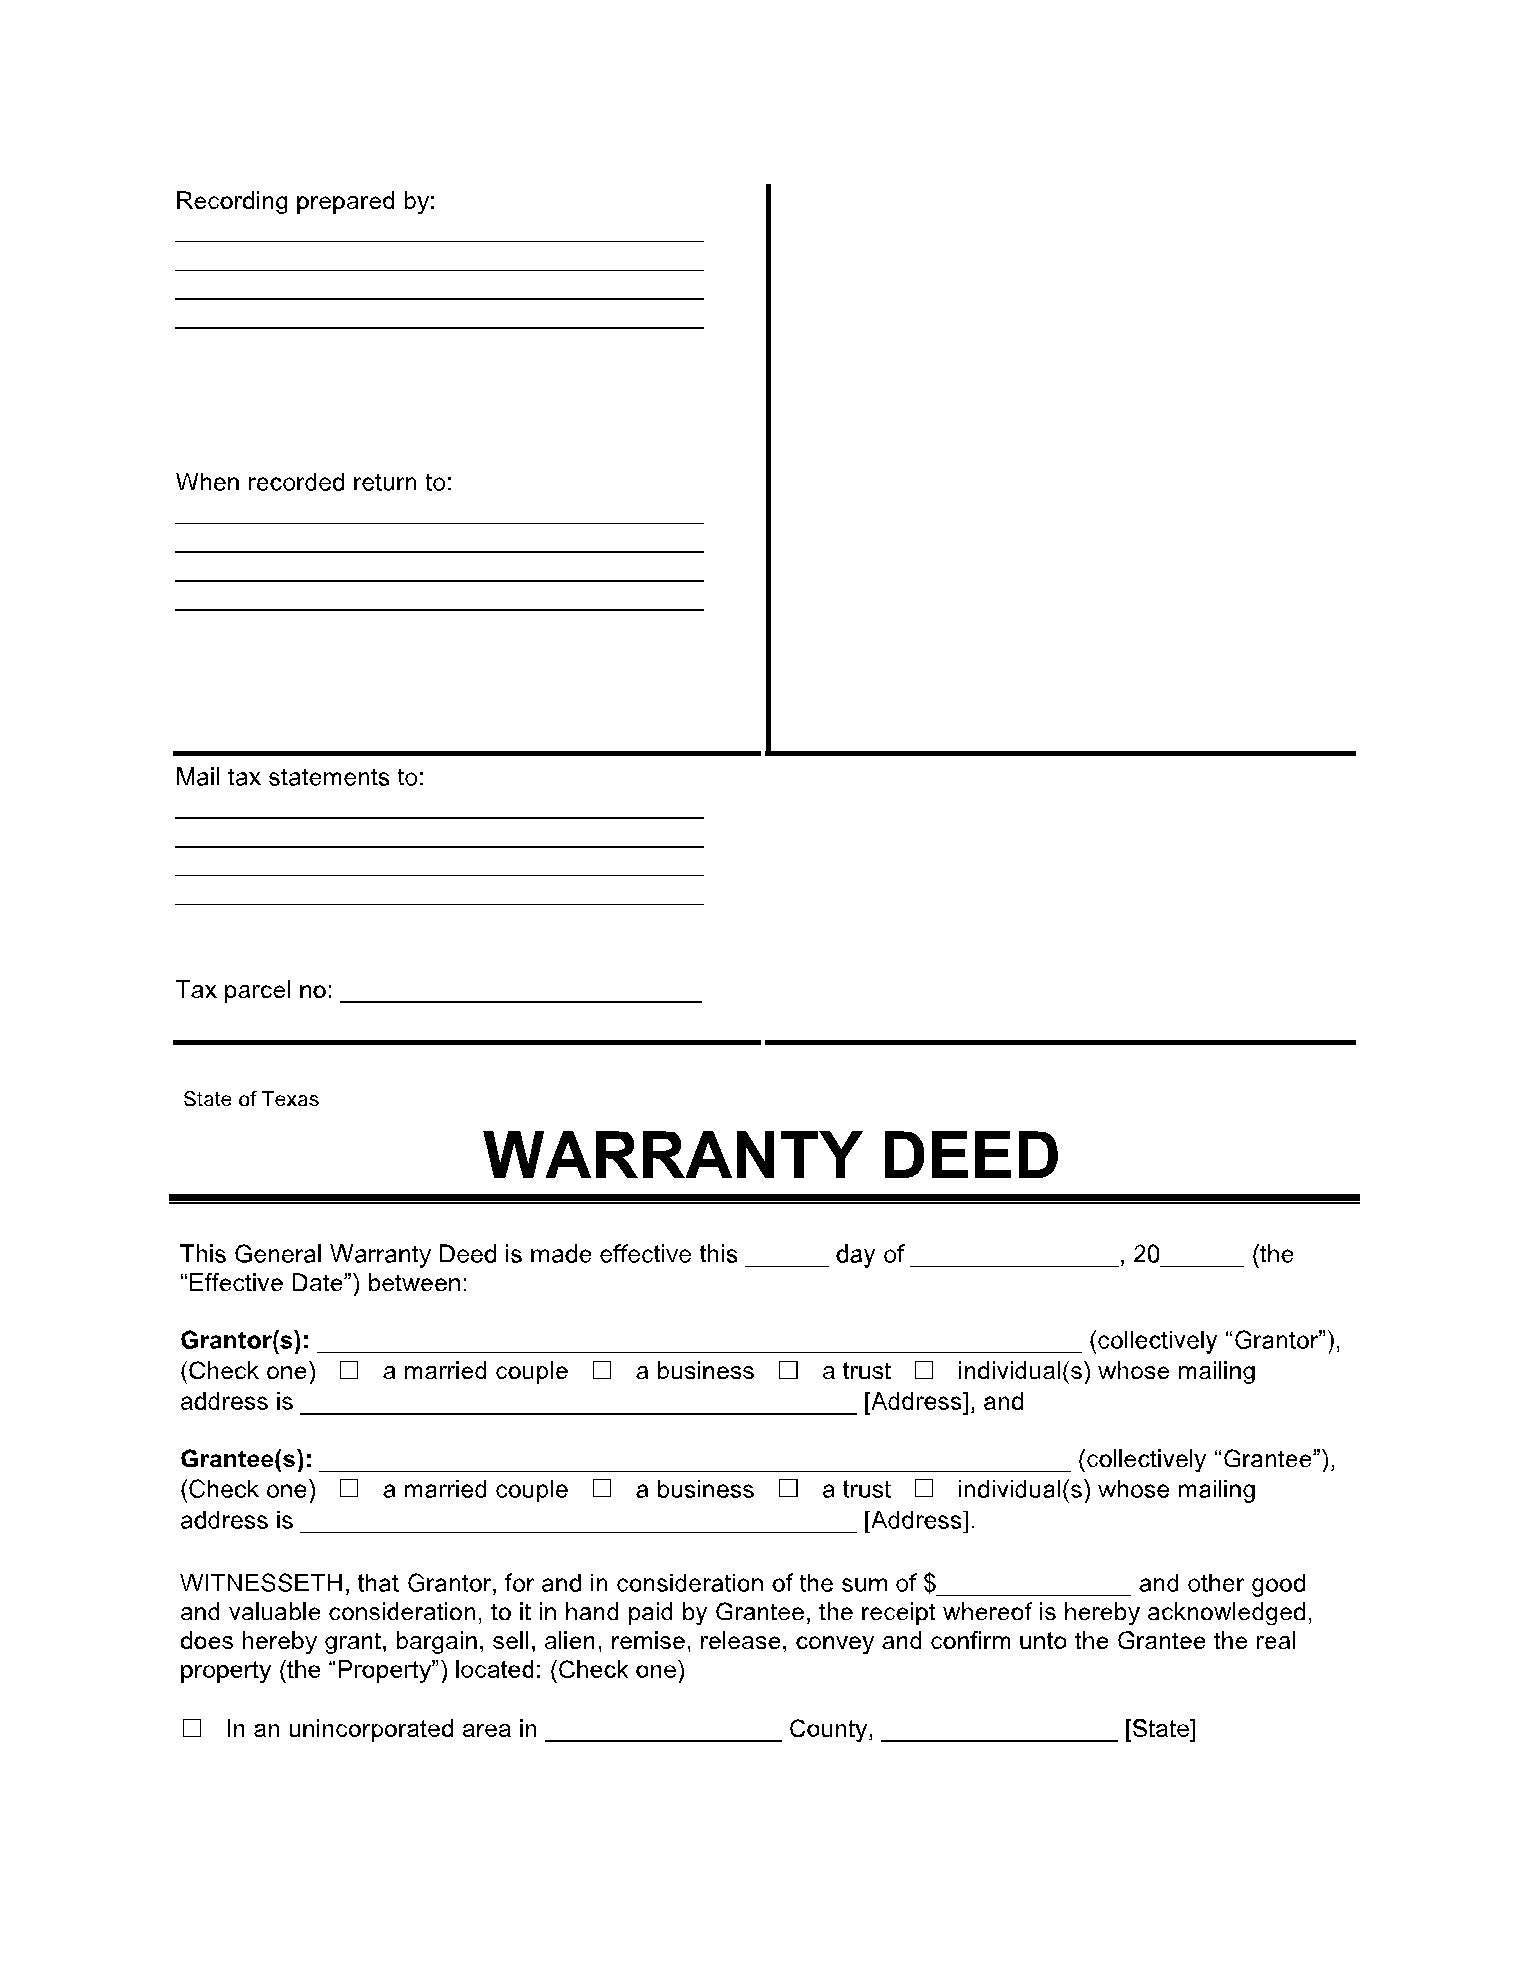 Texas General Warranty Deed Form